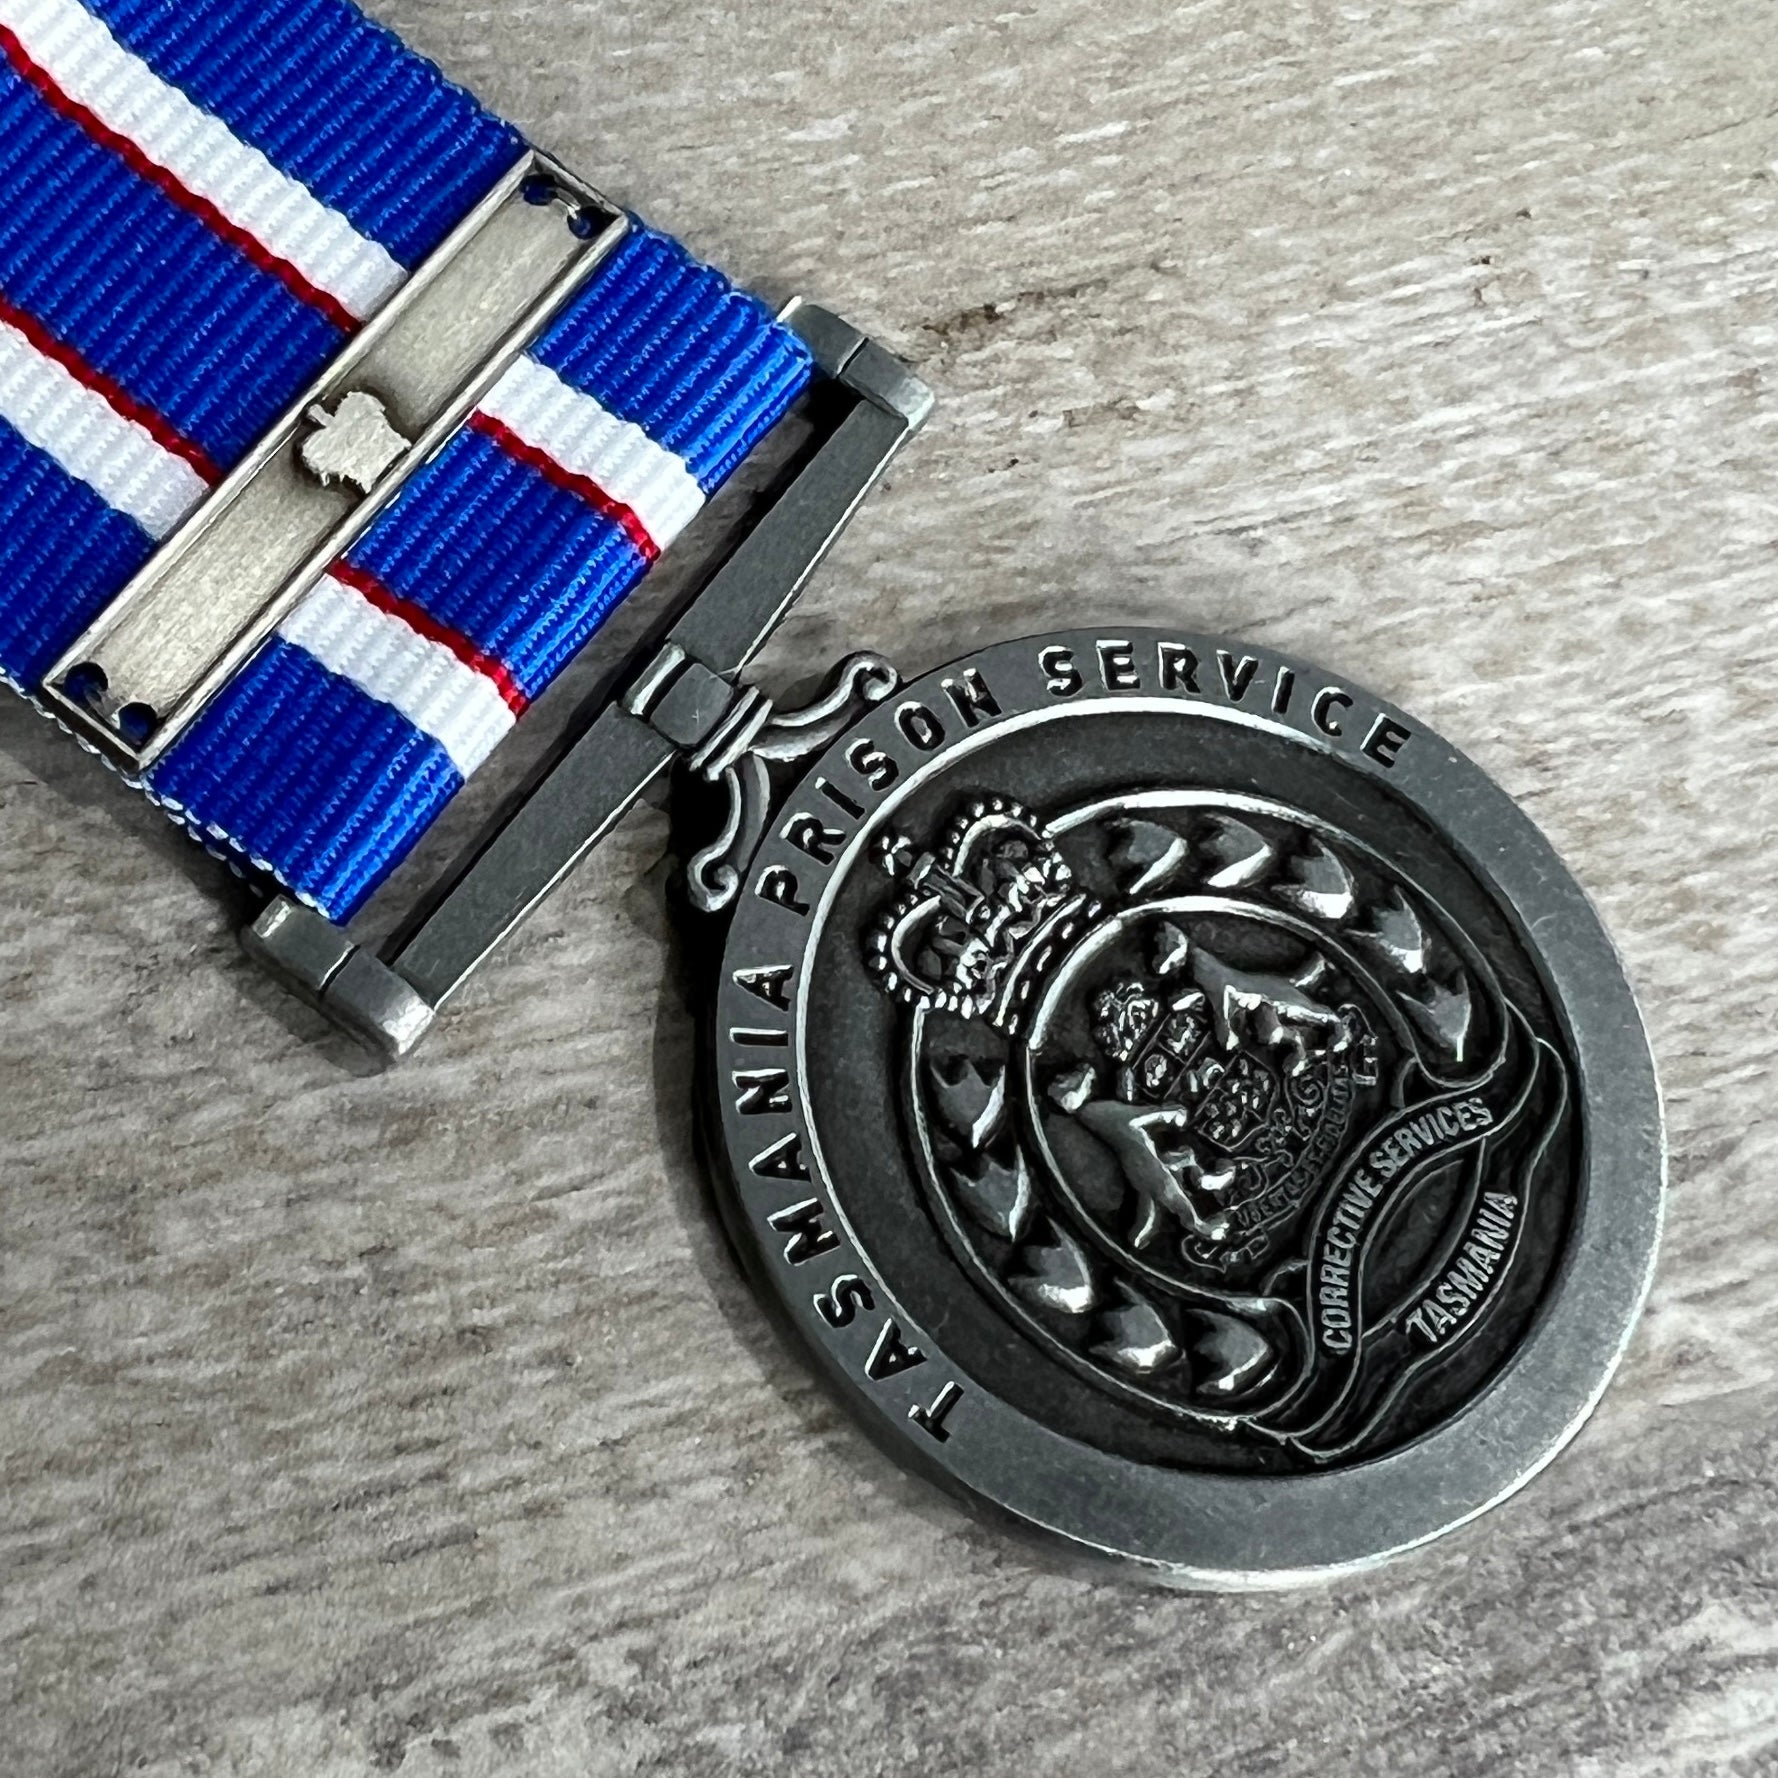 Tasmania Prison Service - Long Service Medal - Foxhole Medals